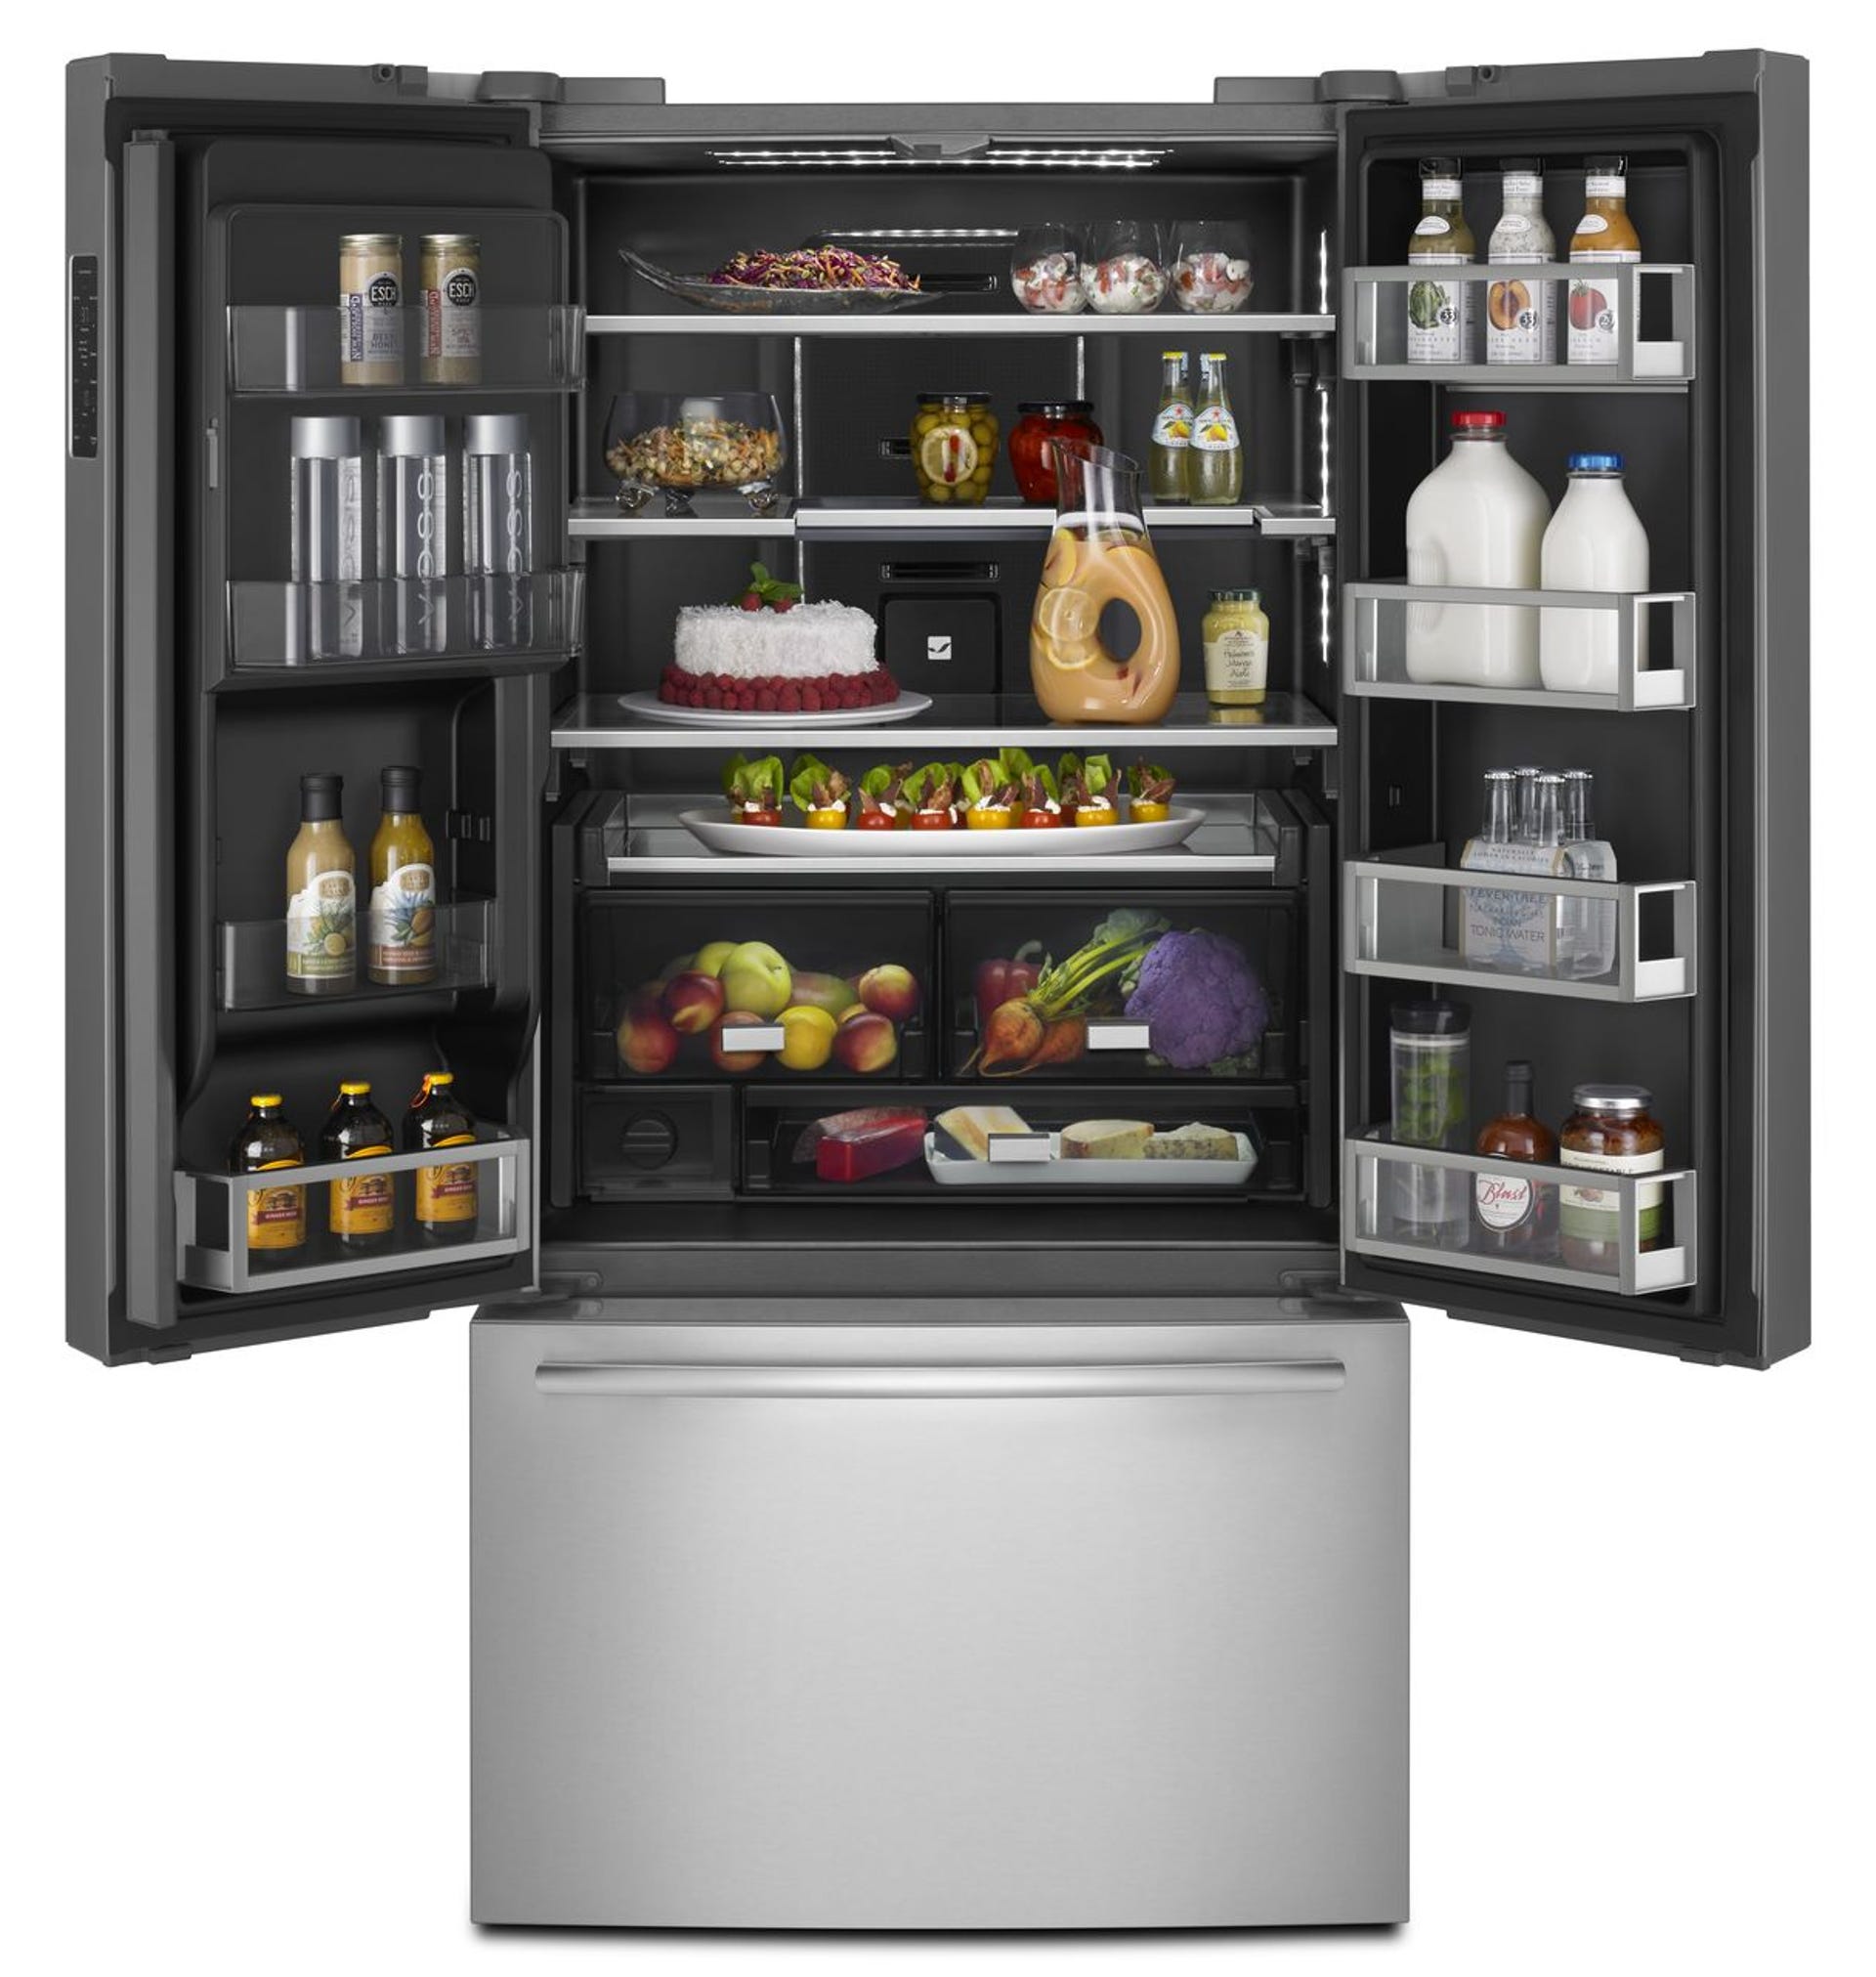 jenn-air-counter-depth-refrigerator-with-wifi-connectivity.jpg